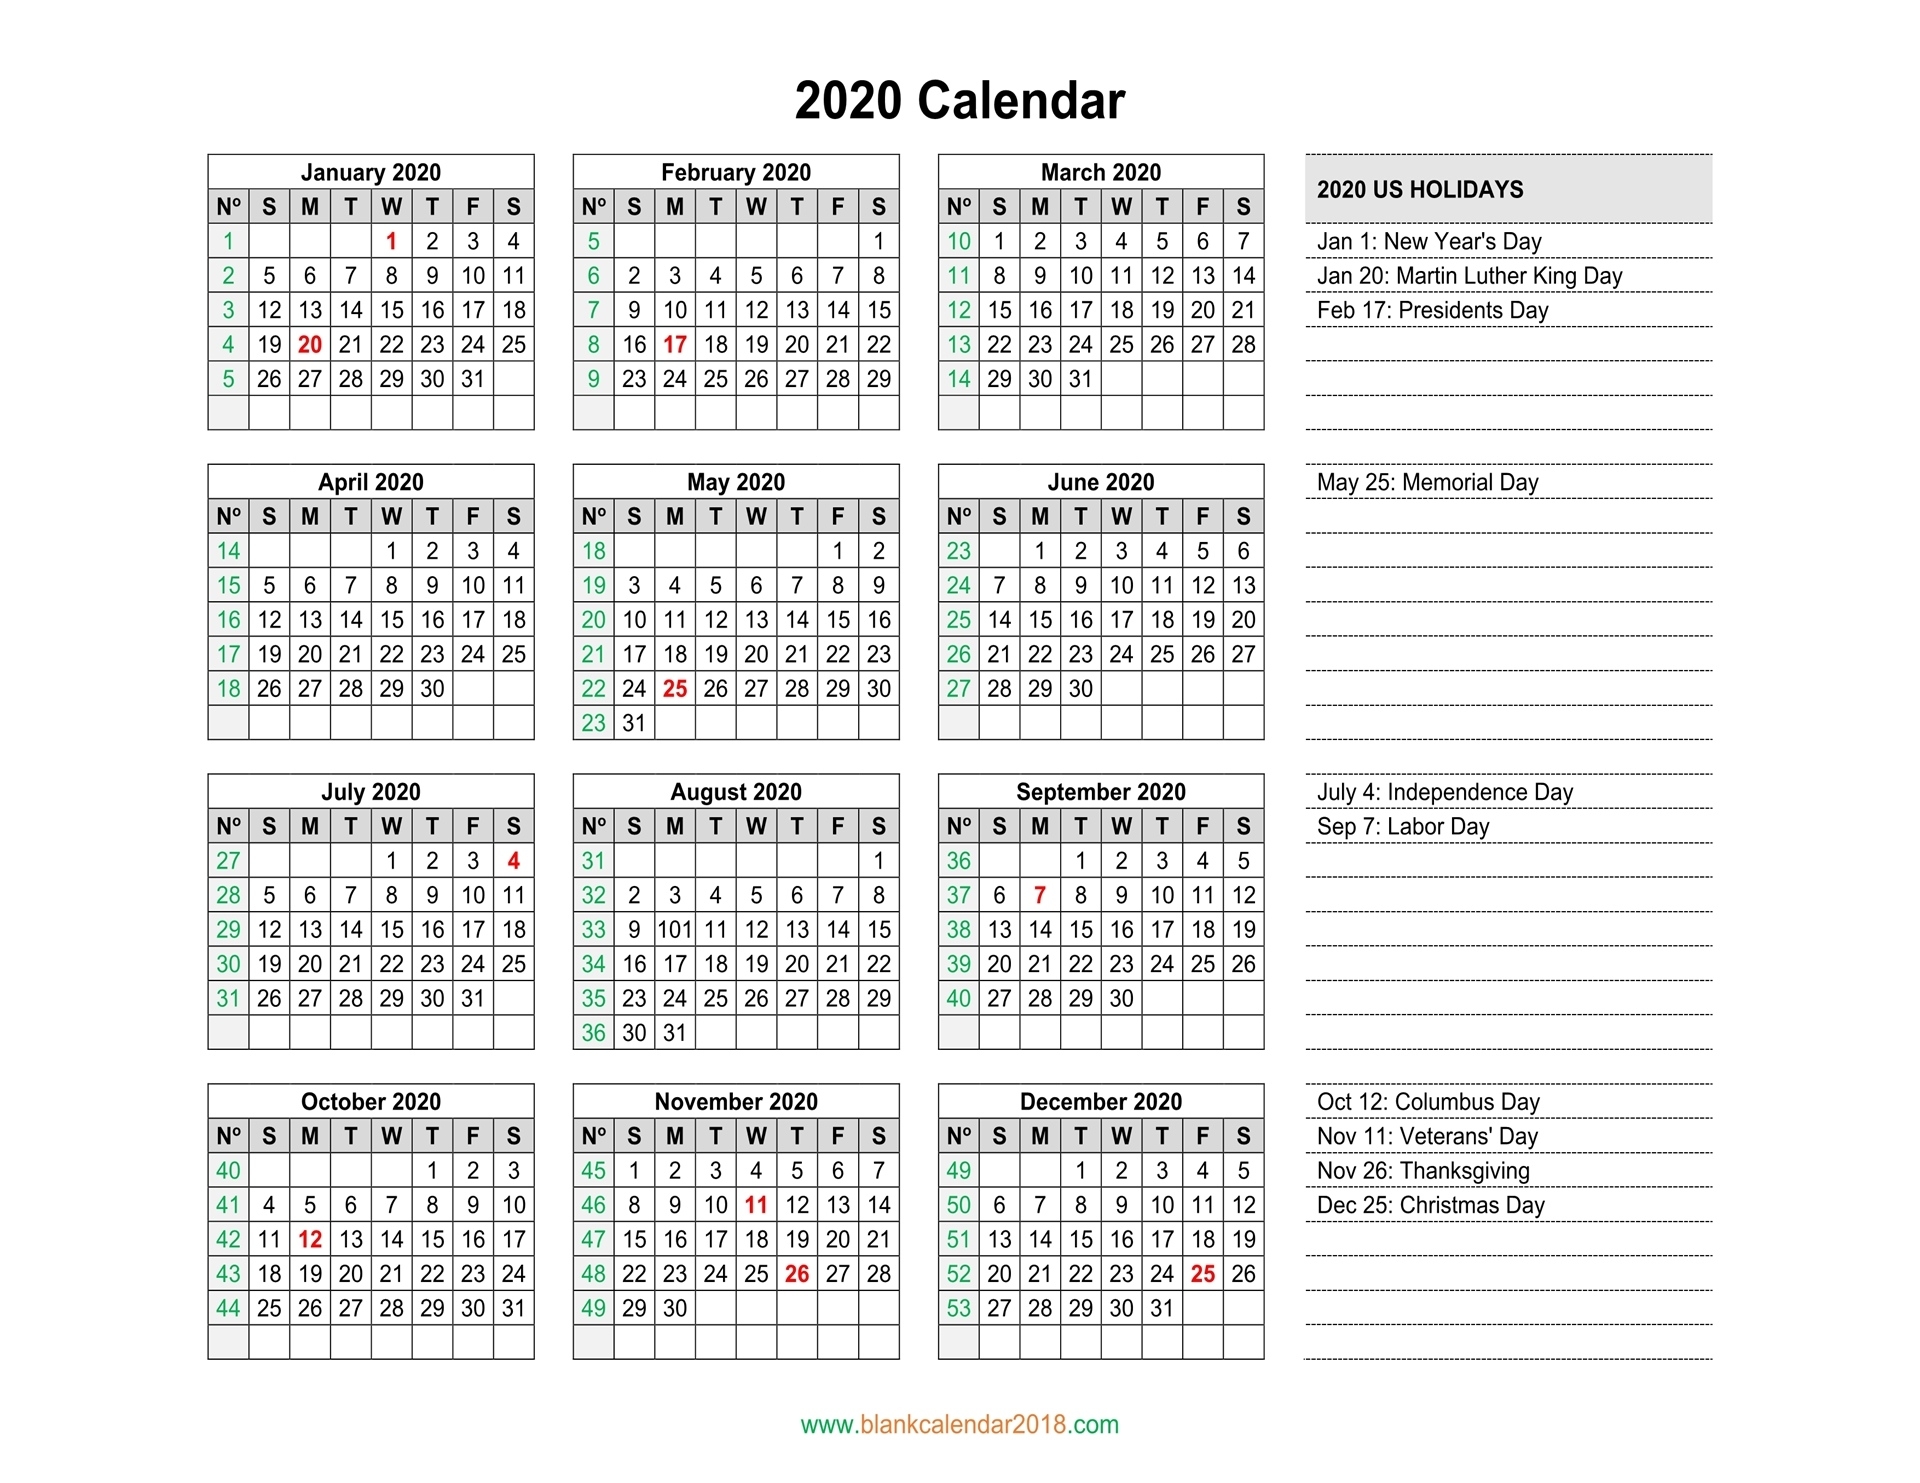 Blank Calendar 2020 2020 Calendar Template Calendarlabs.com